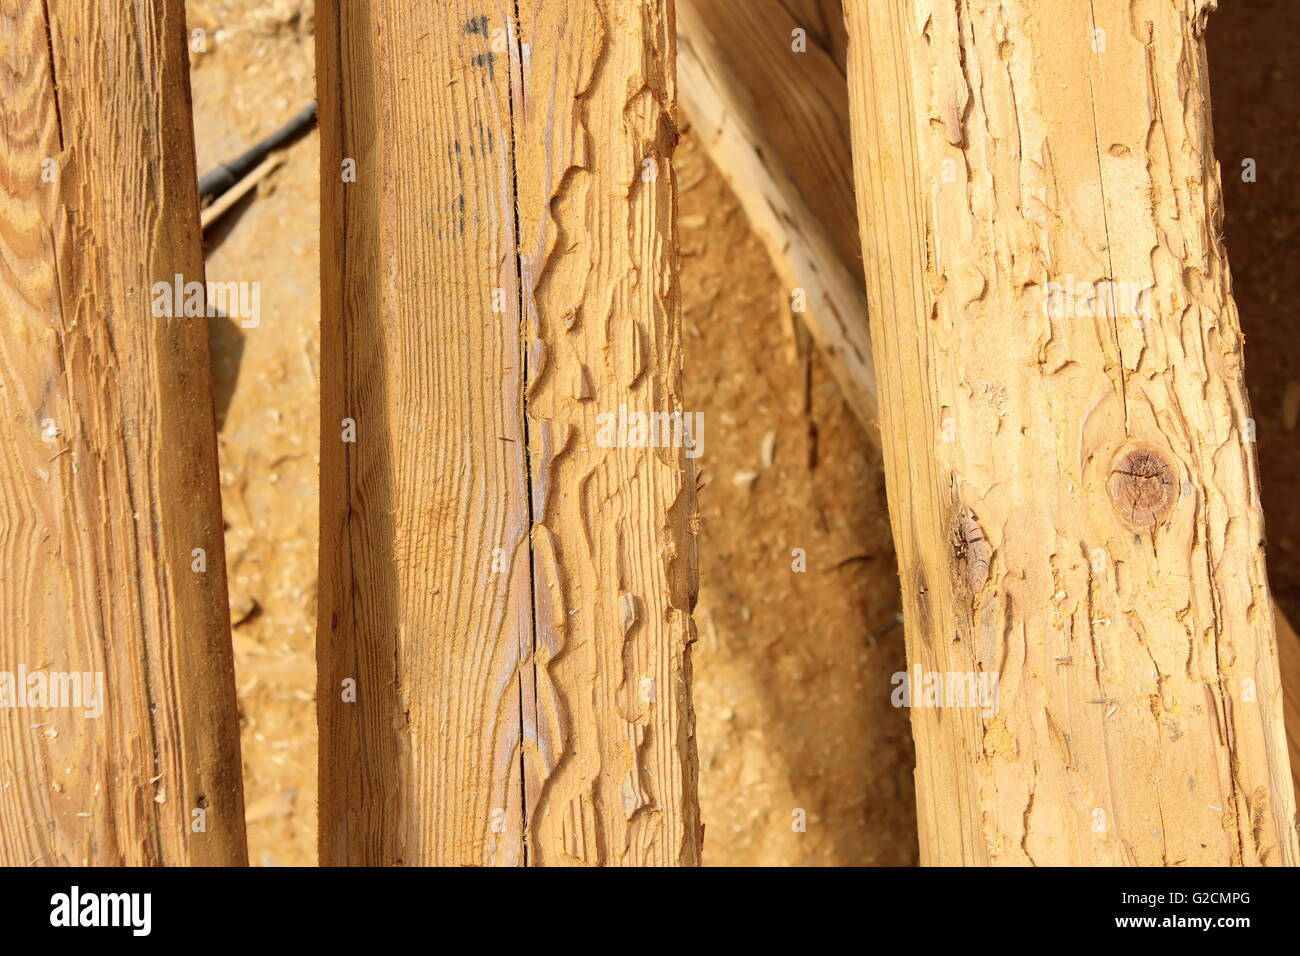 Konstruktion aus Holzbalken durch Insektenbefall (Hylotrupes Bajulus, Haus Longhorn Beetle) zerstört Stockfoto